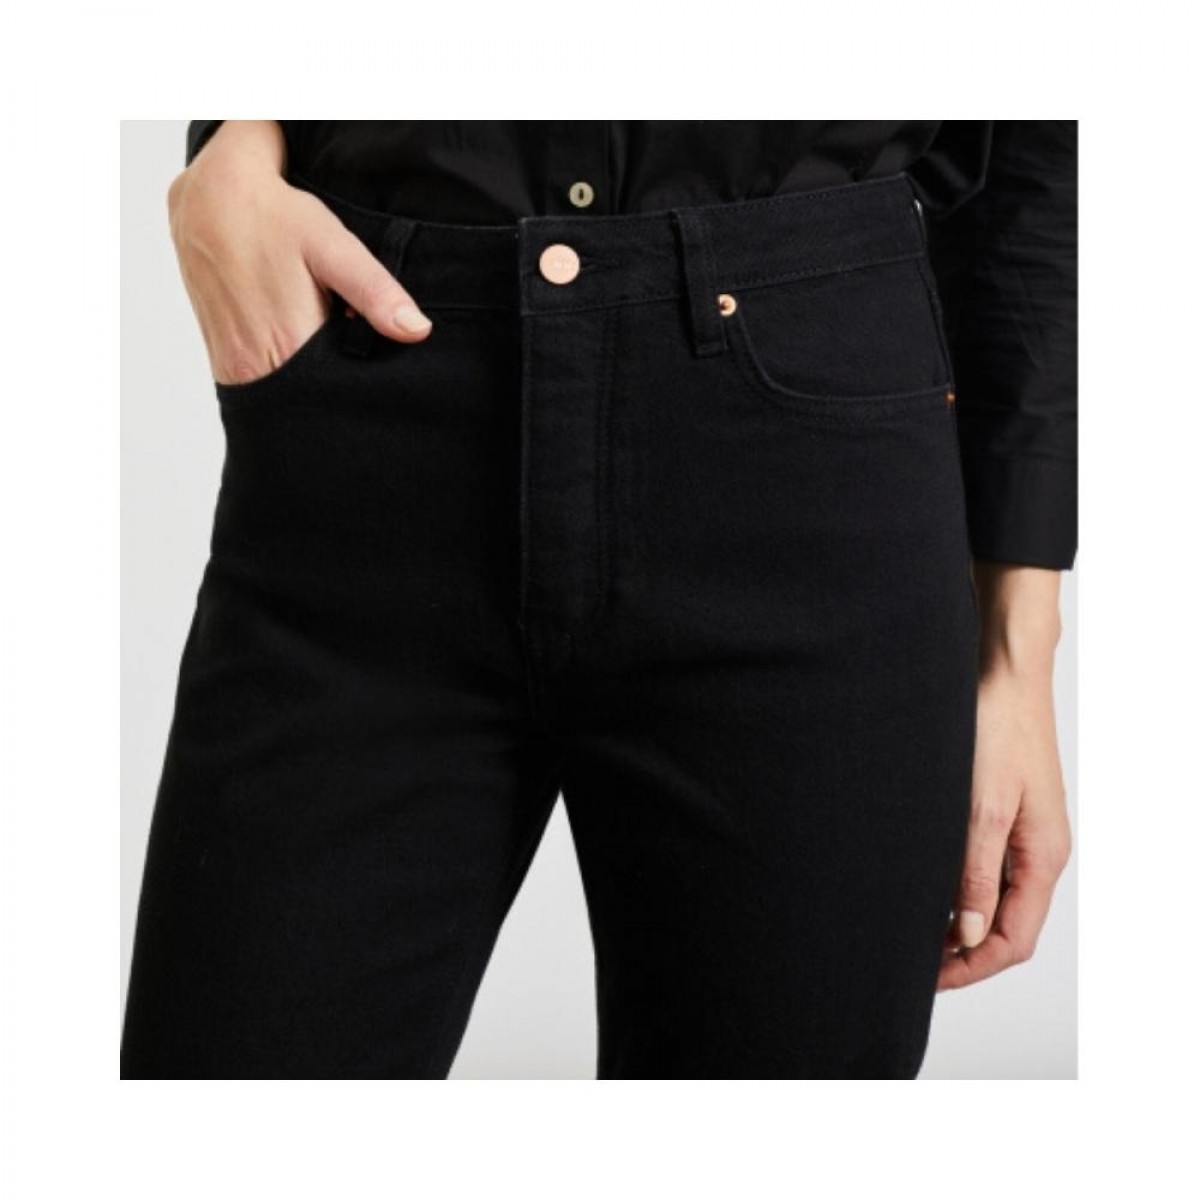 milo jeans - black - lommer